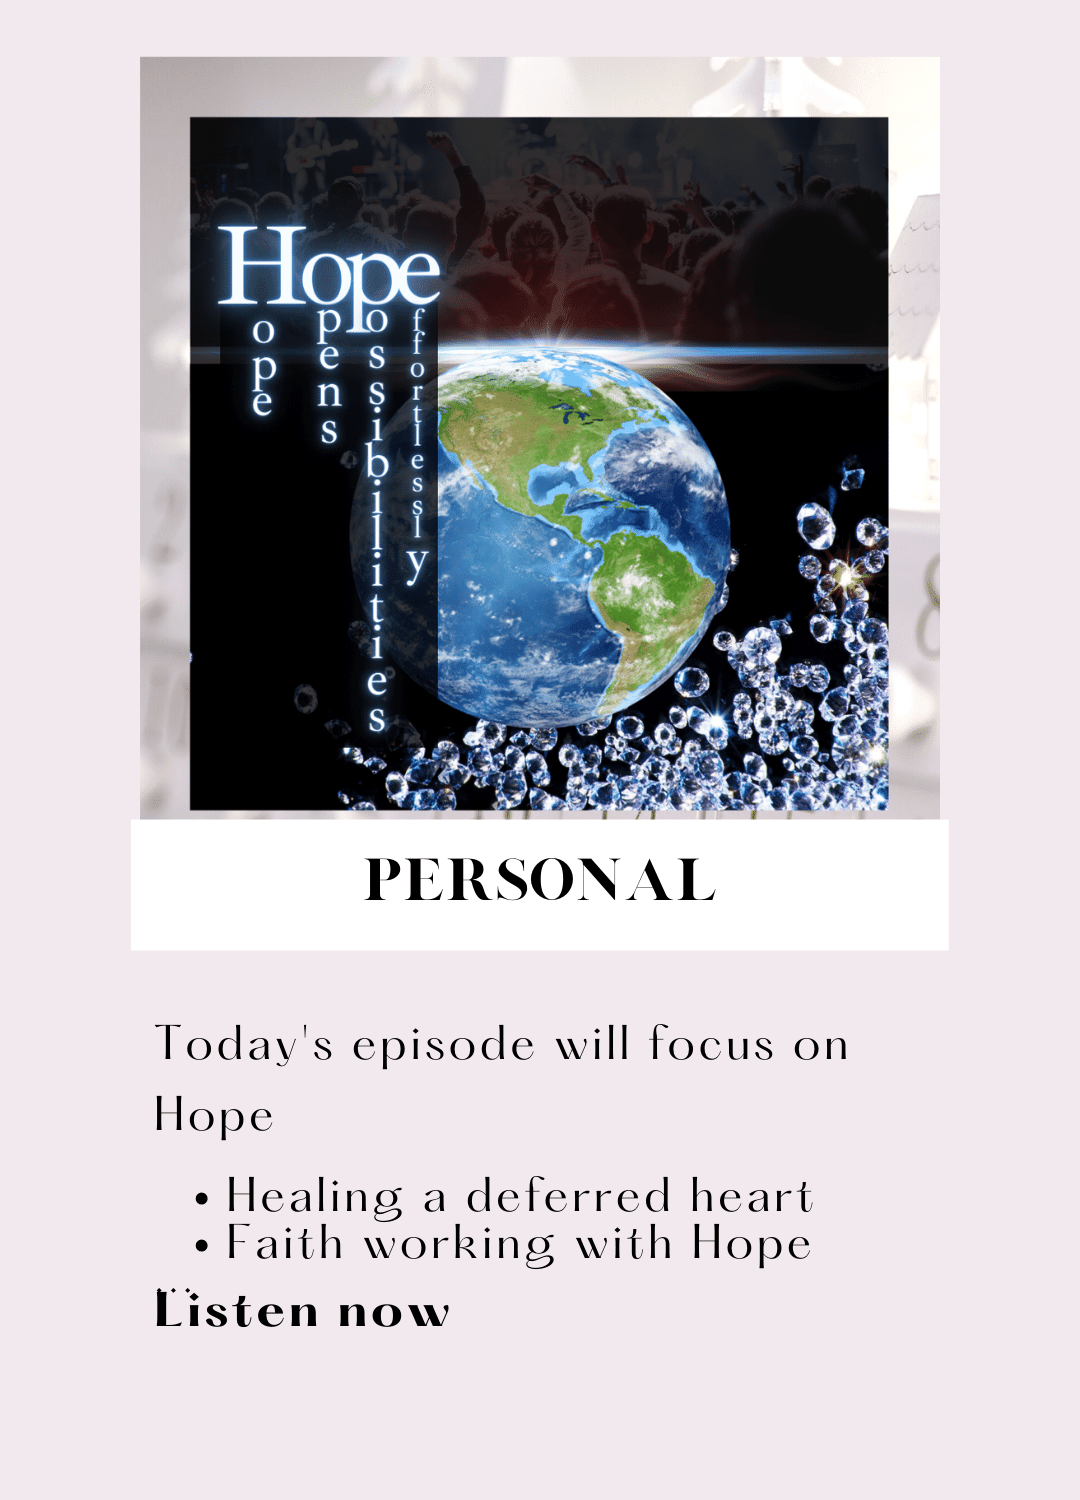 Hope Opens Possibilities Effortlessly Episode 